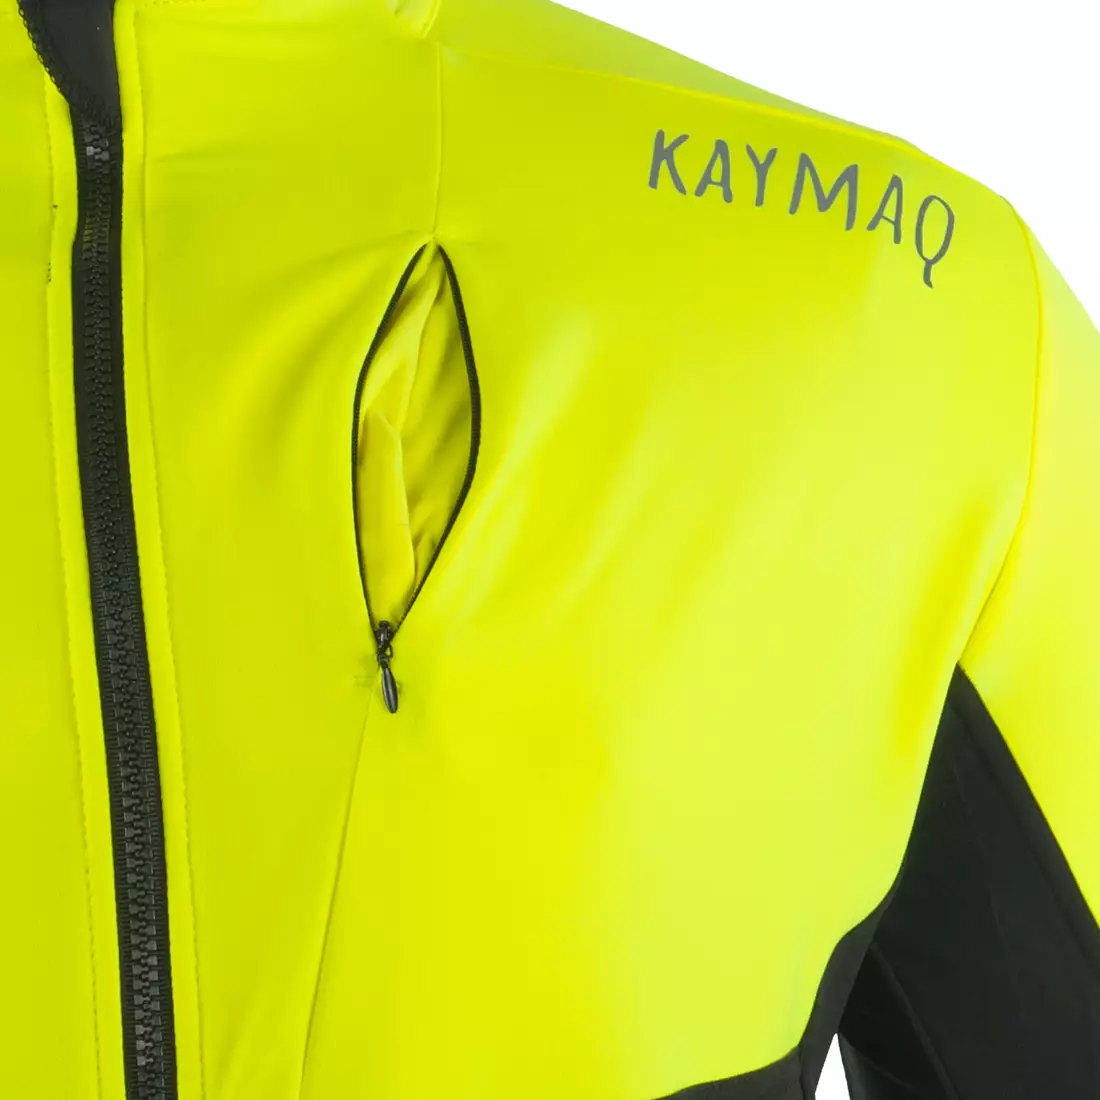 KAYMAQ KYQLS-001 pánská cyklistická mikina námořnická fluor žluto-černá softshell